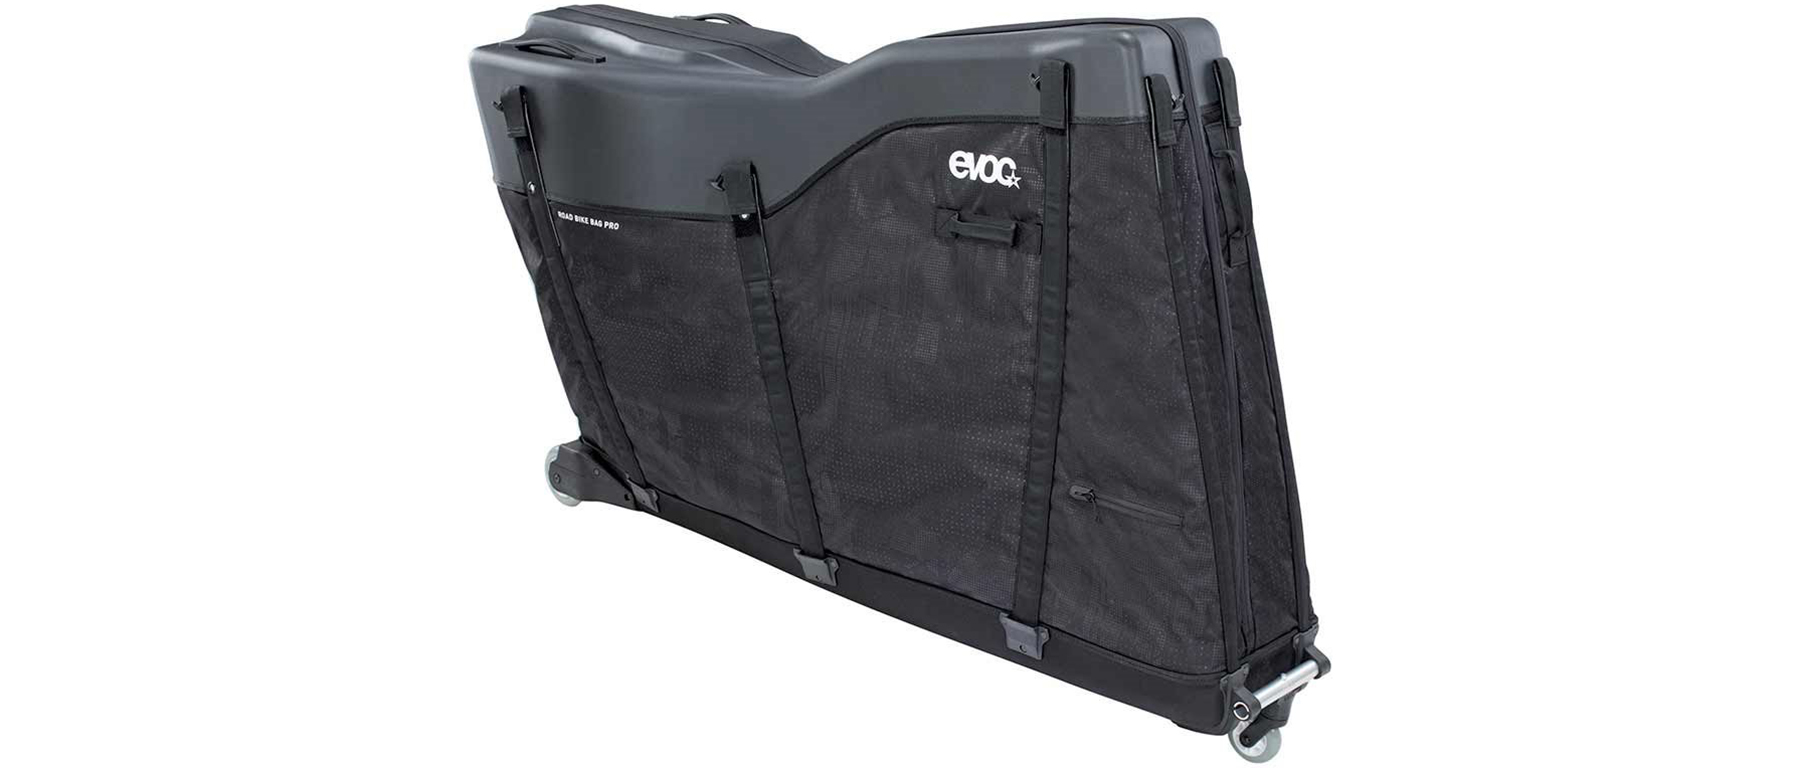 EVOC Road Bike Bag Pro